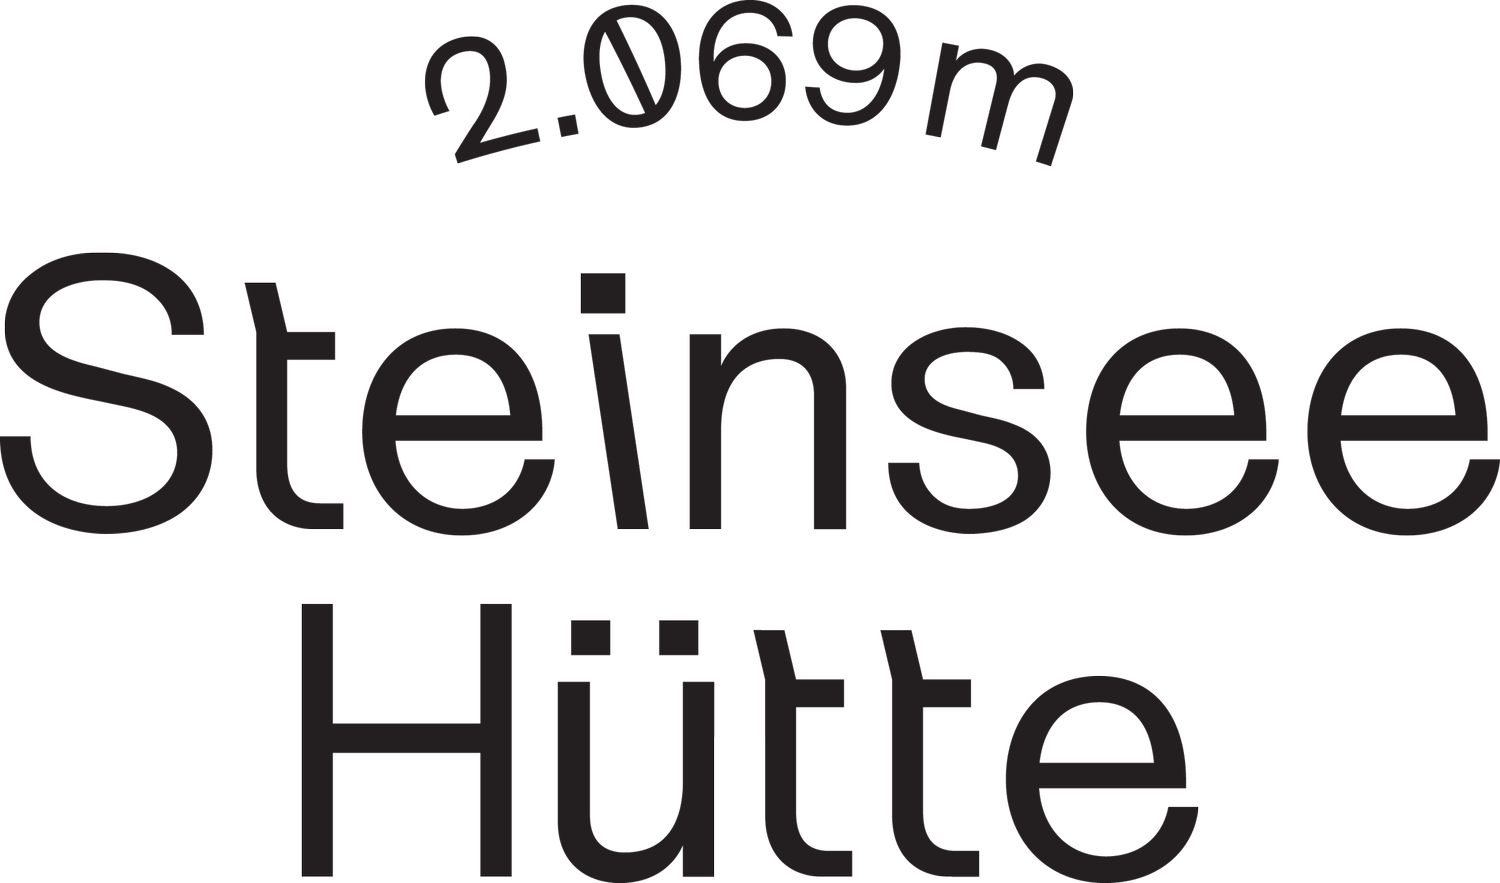 (c) Steinseehuette.at